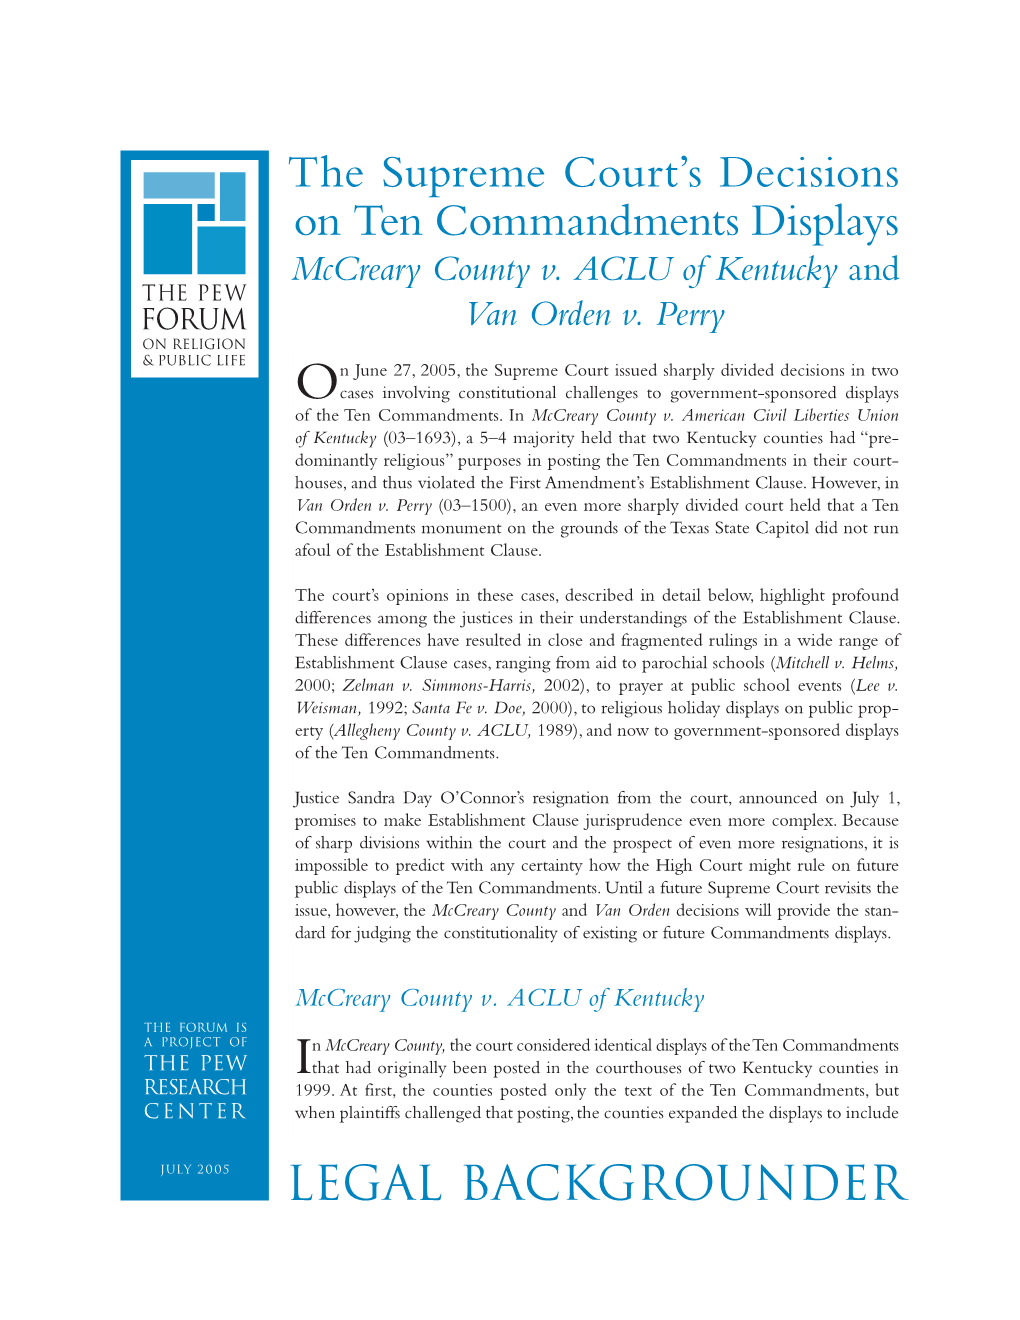 The Supreme Court's Decisions on Ten Commandments Displays